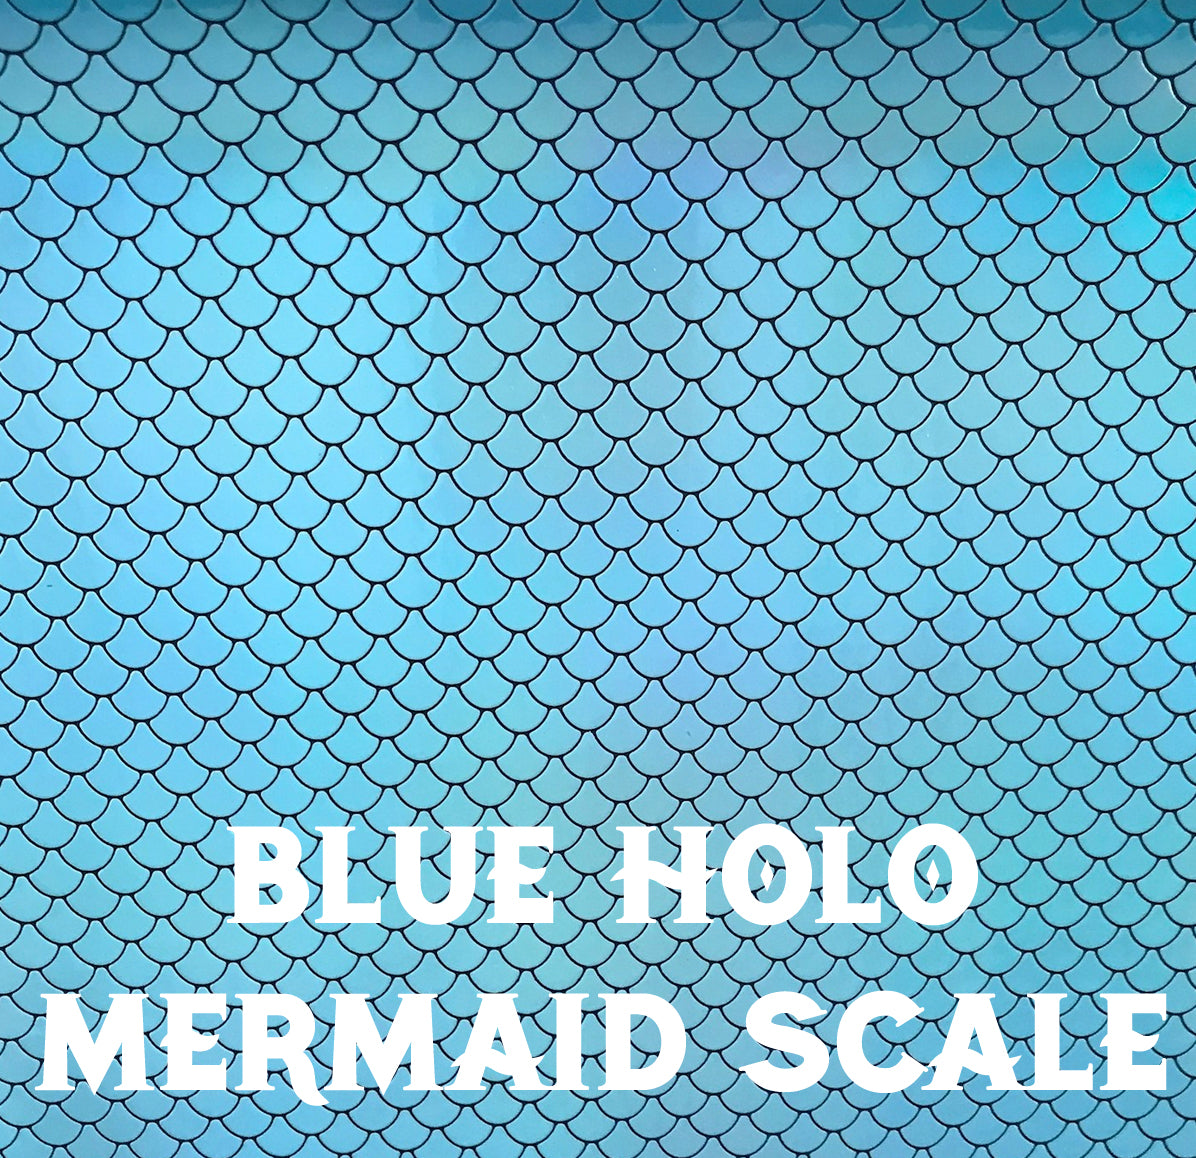 Build a Custom Mermaid Cover